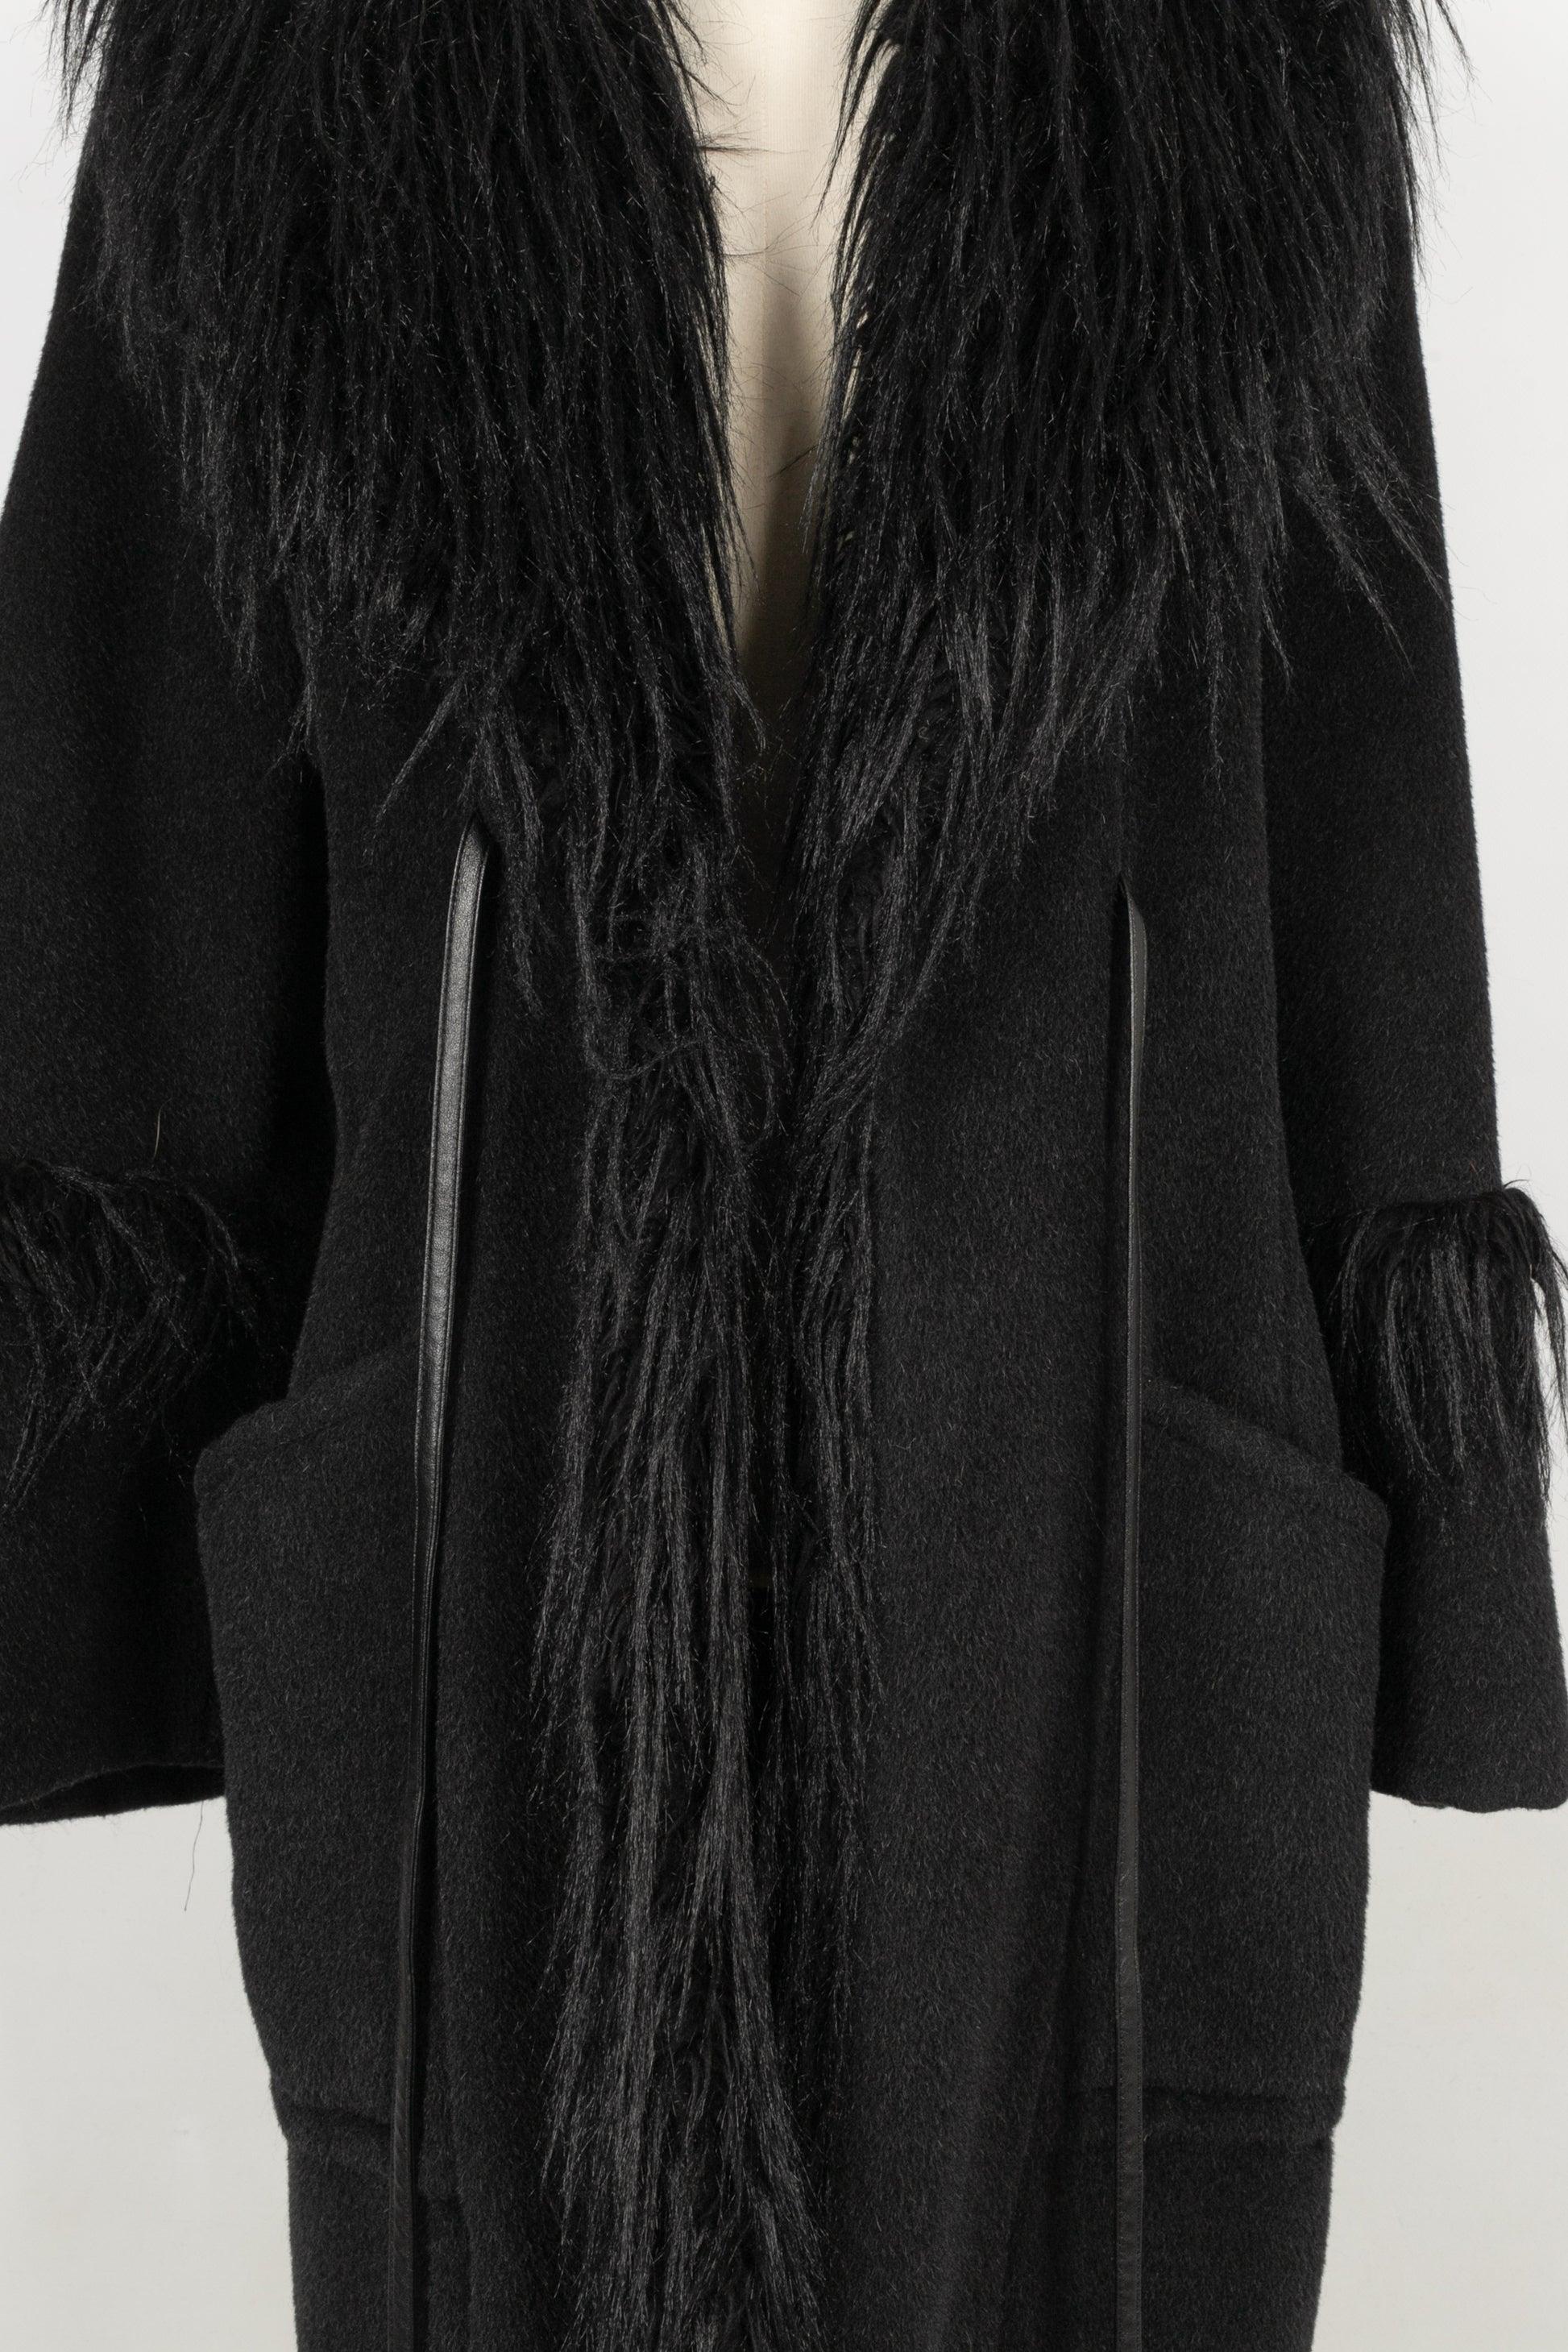 Mugler Black Coat Edged with Faux Fur 40FR, 2000s For Sale 2